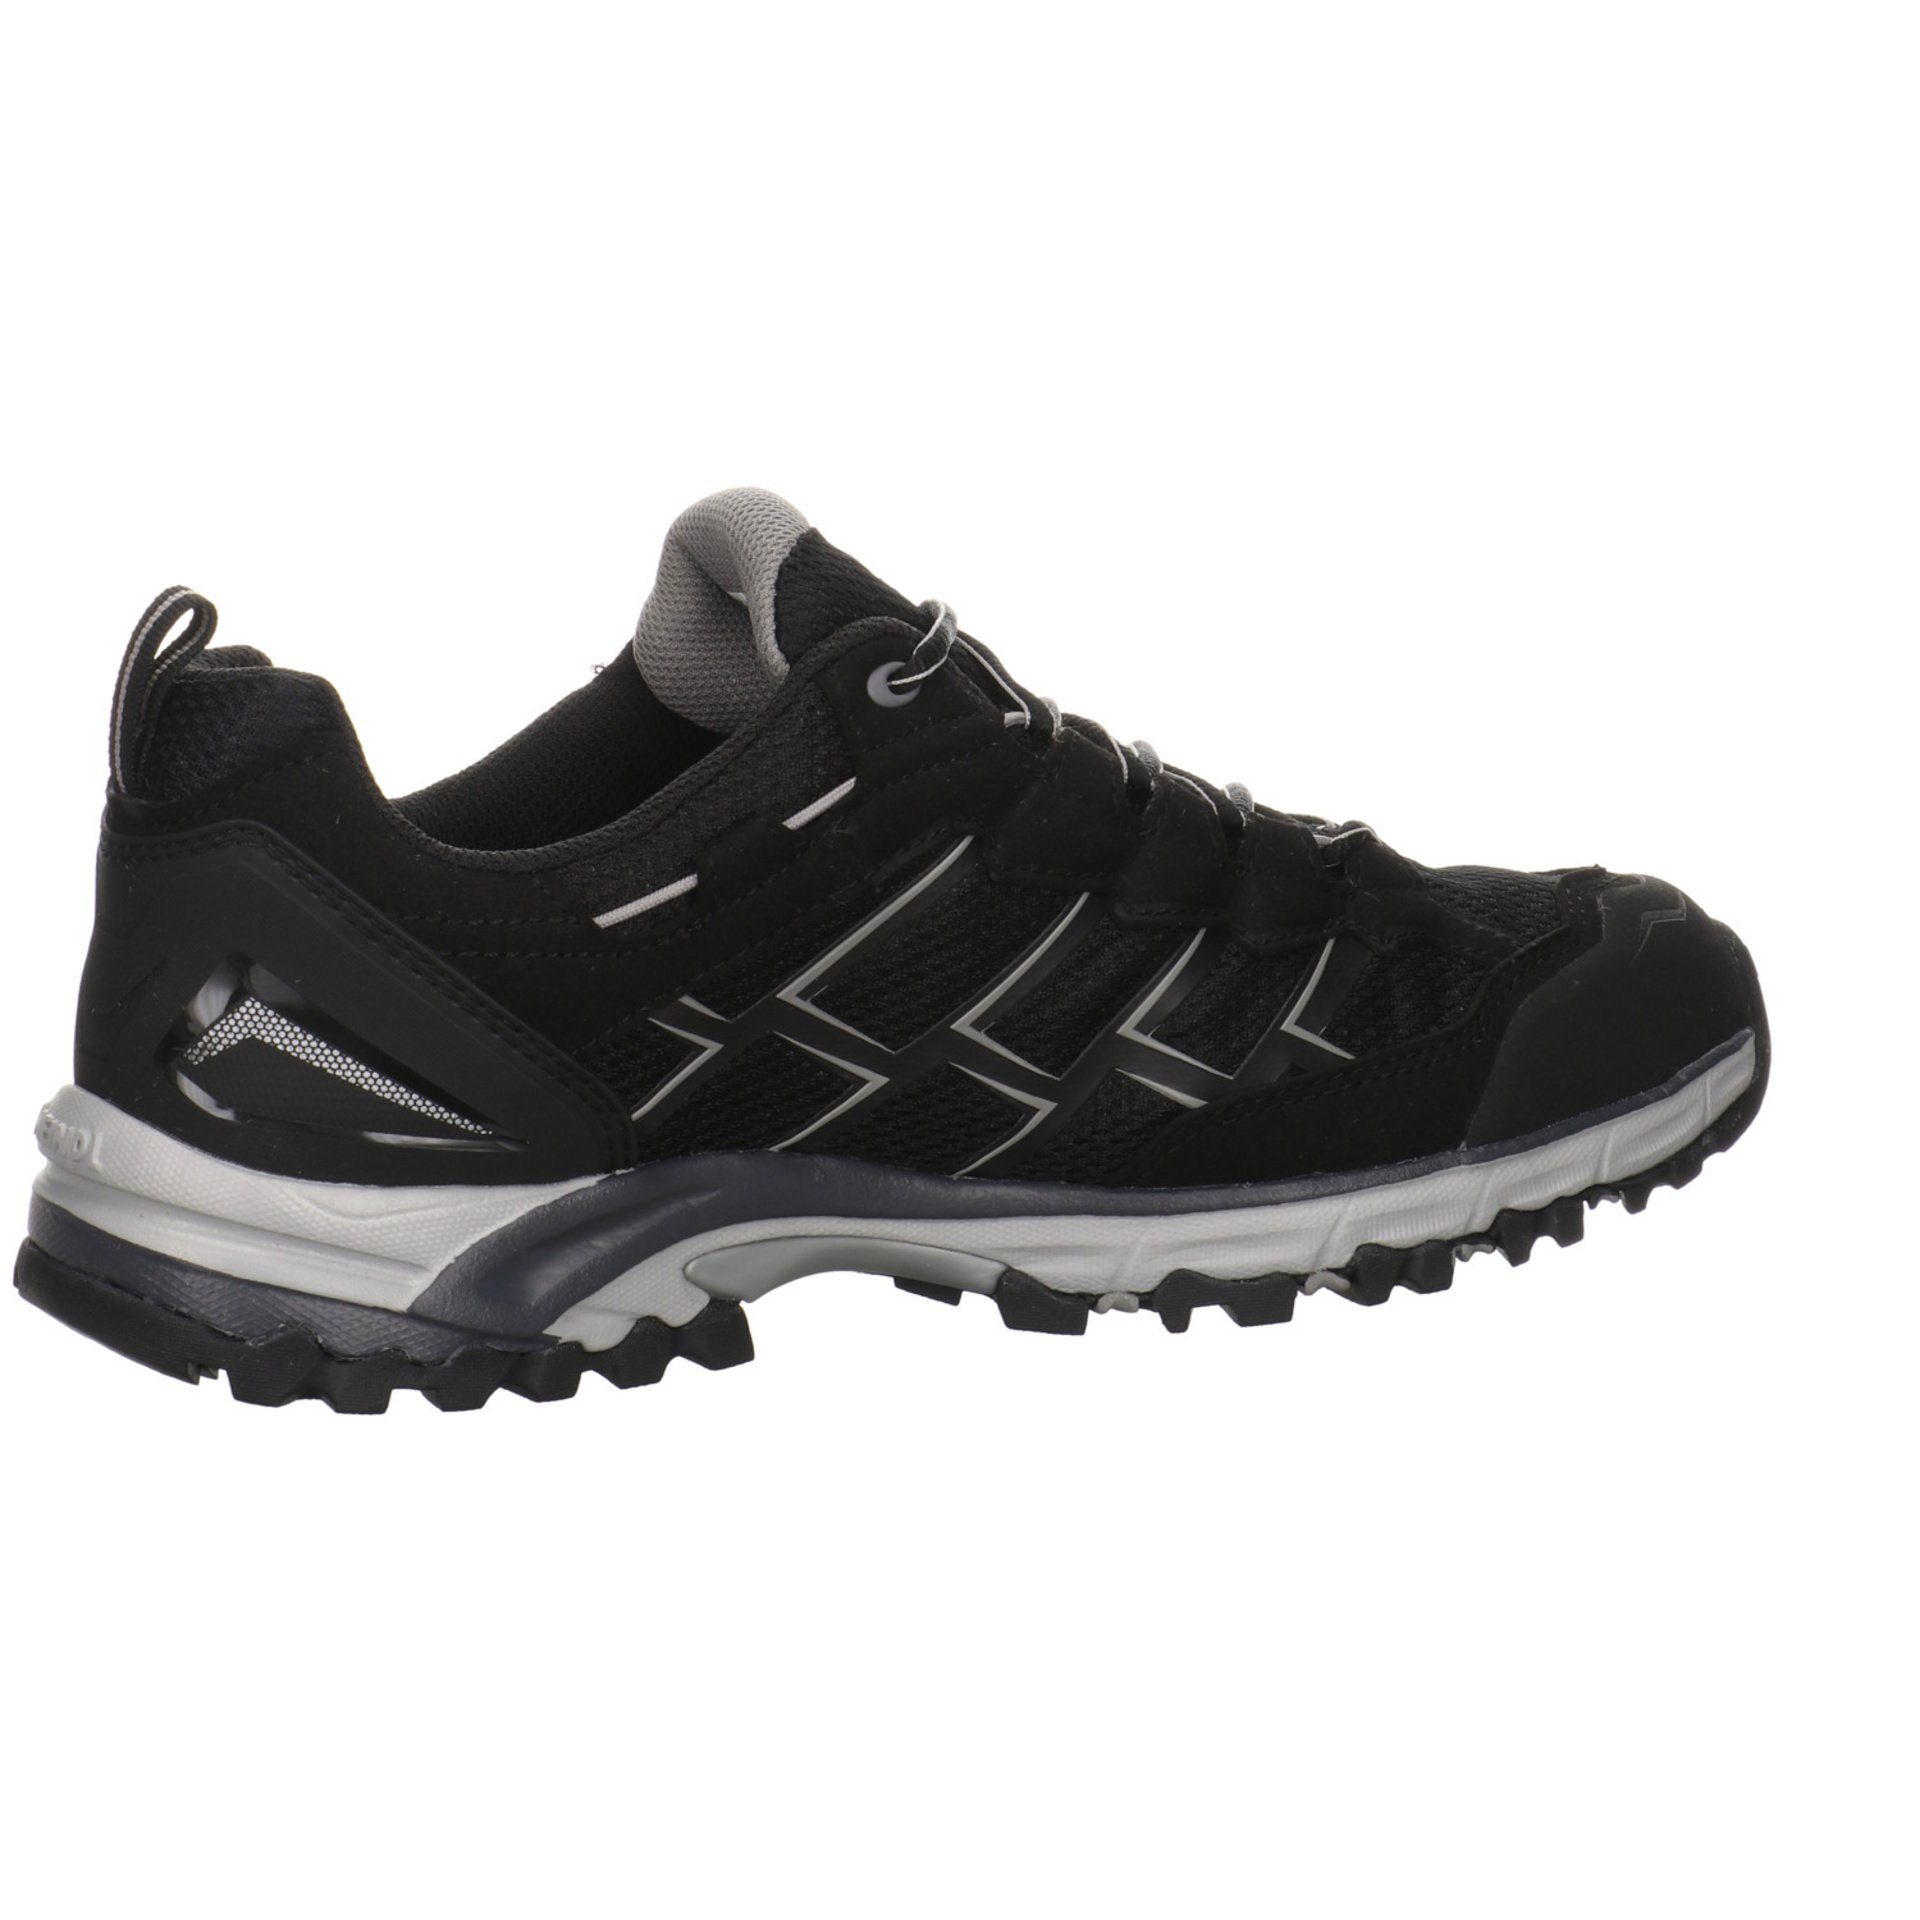 Meindl Herren Outdoor Outdoorschuh Outdoorschuh Textil Schuhe GTX black/grey Caribe